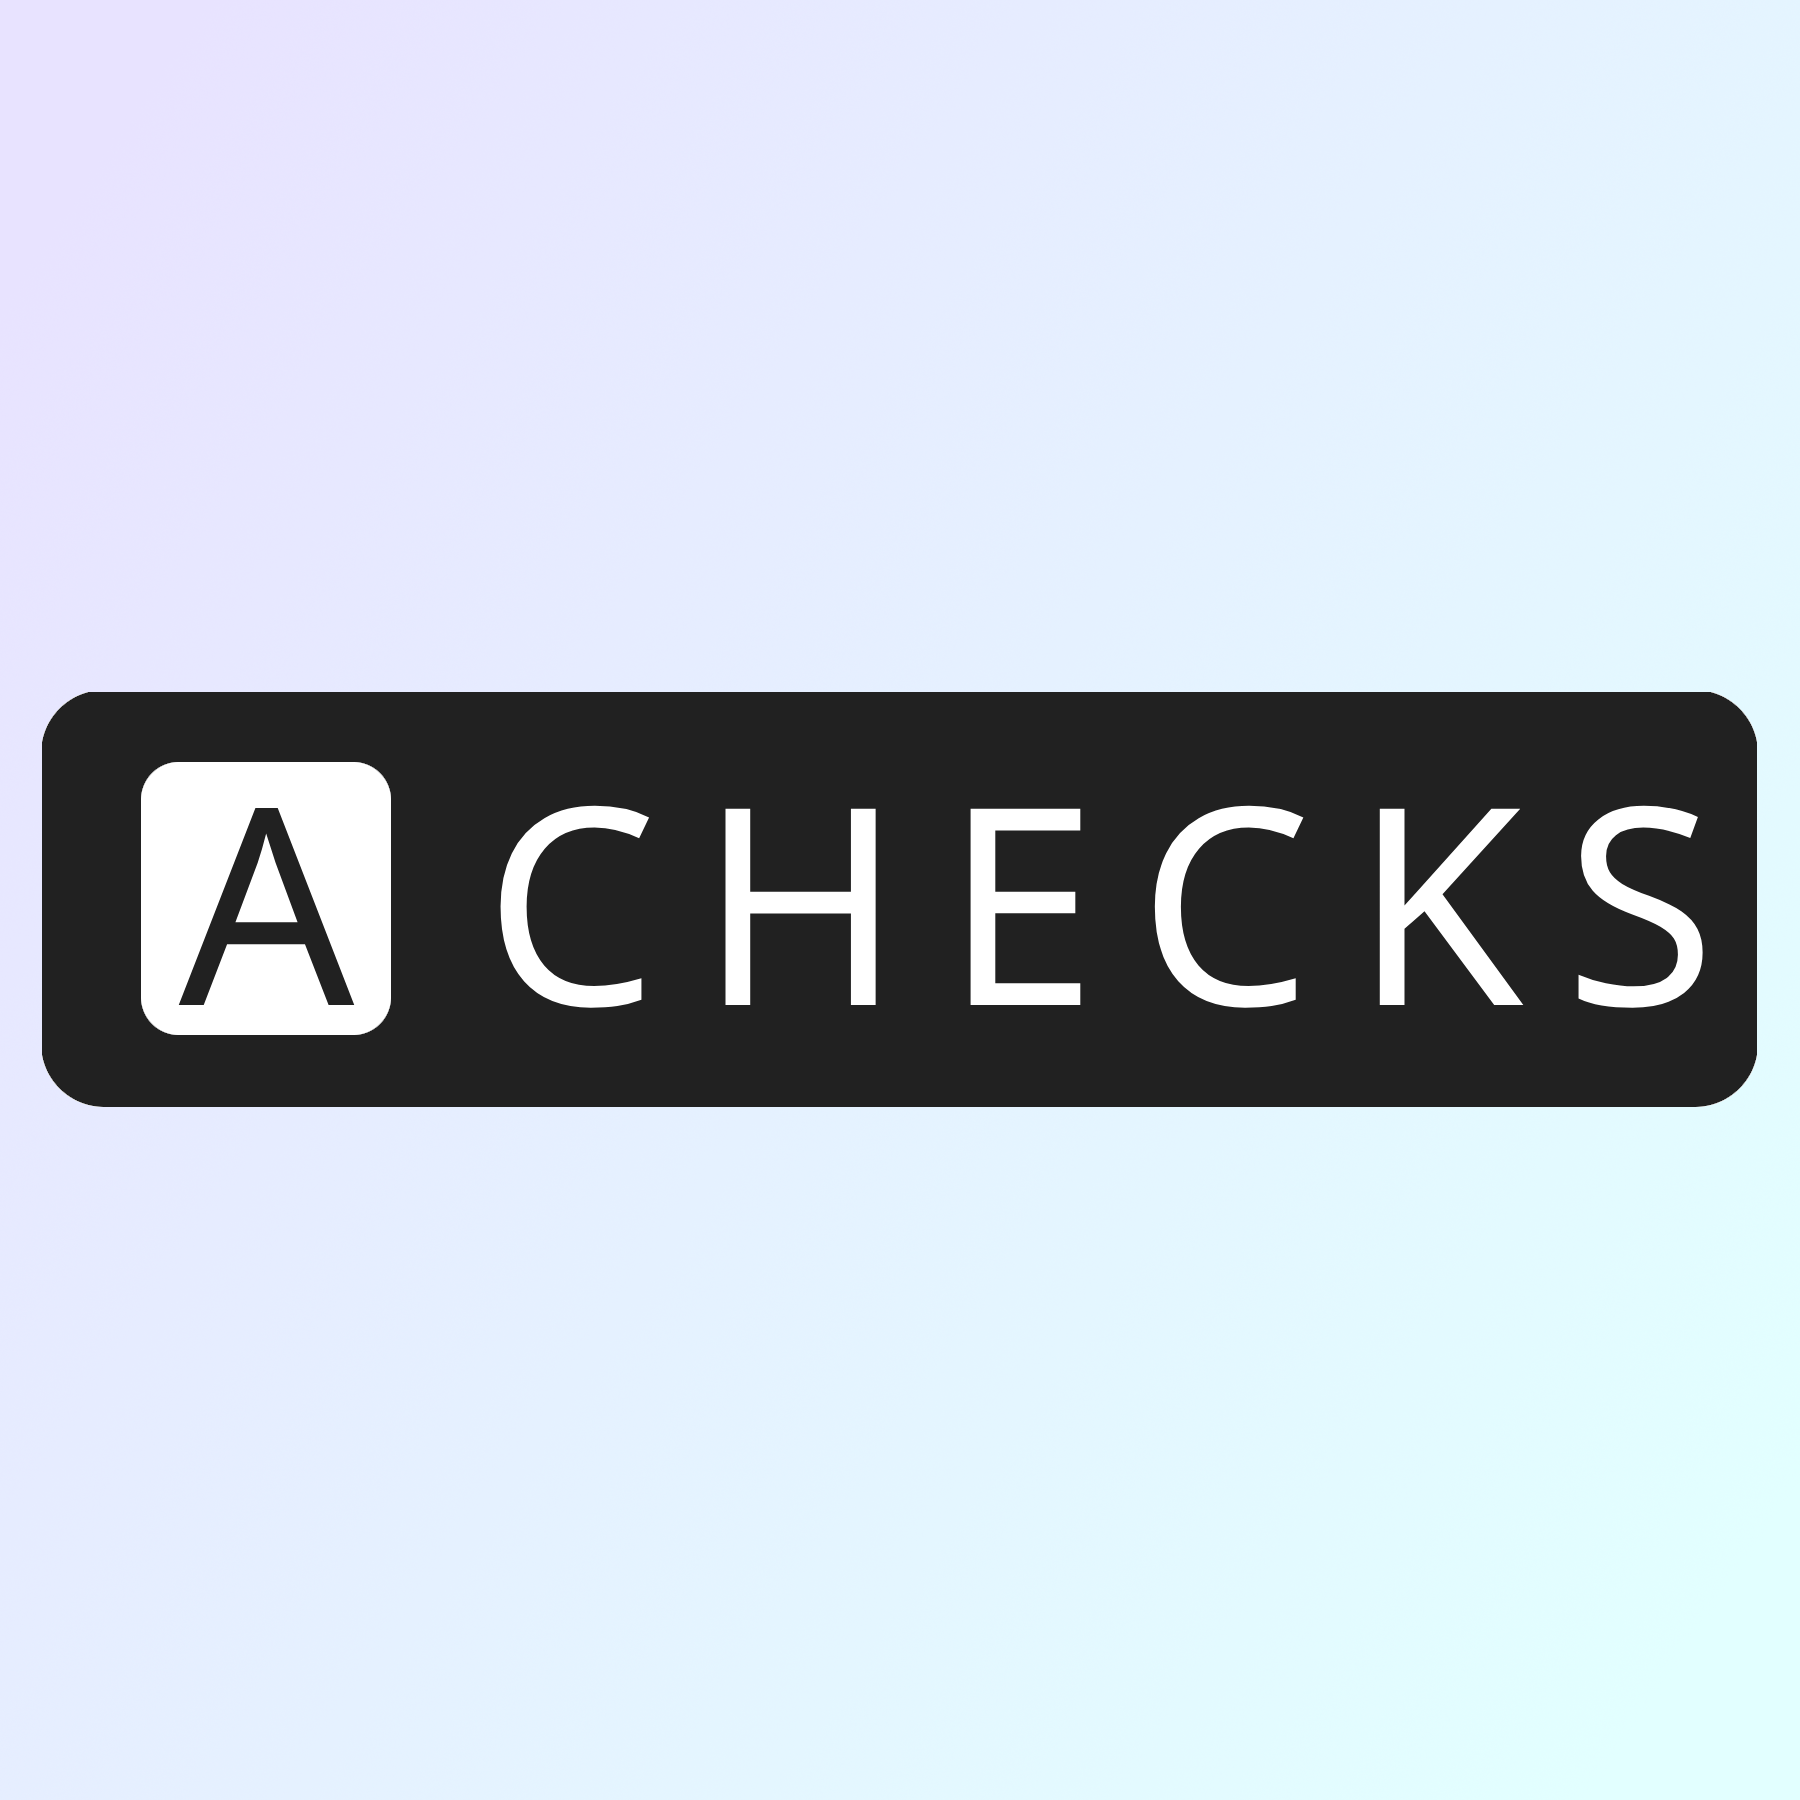 (c) Achecks.org